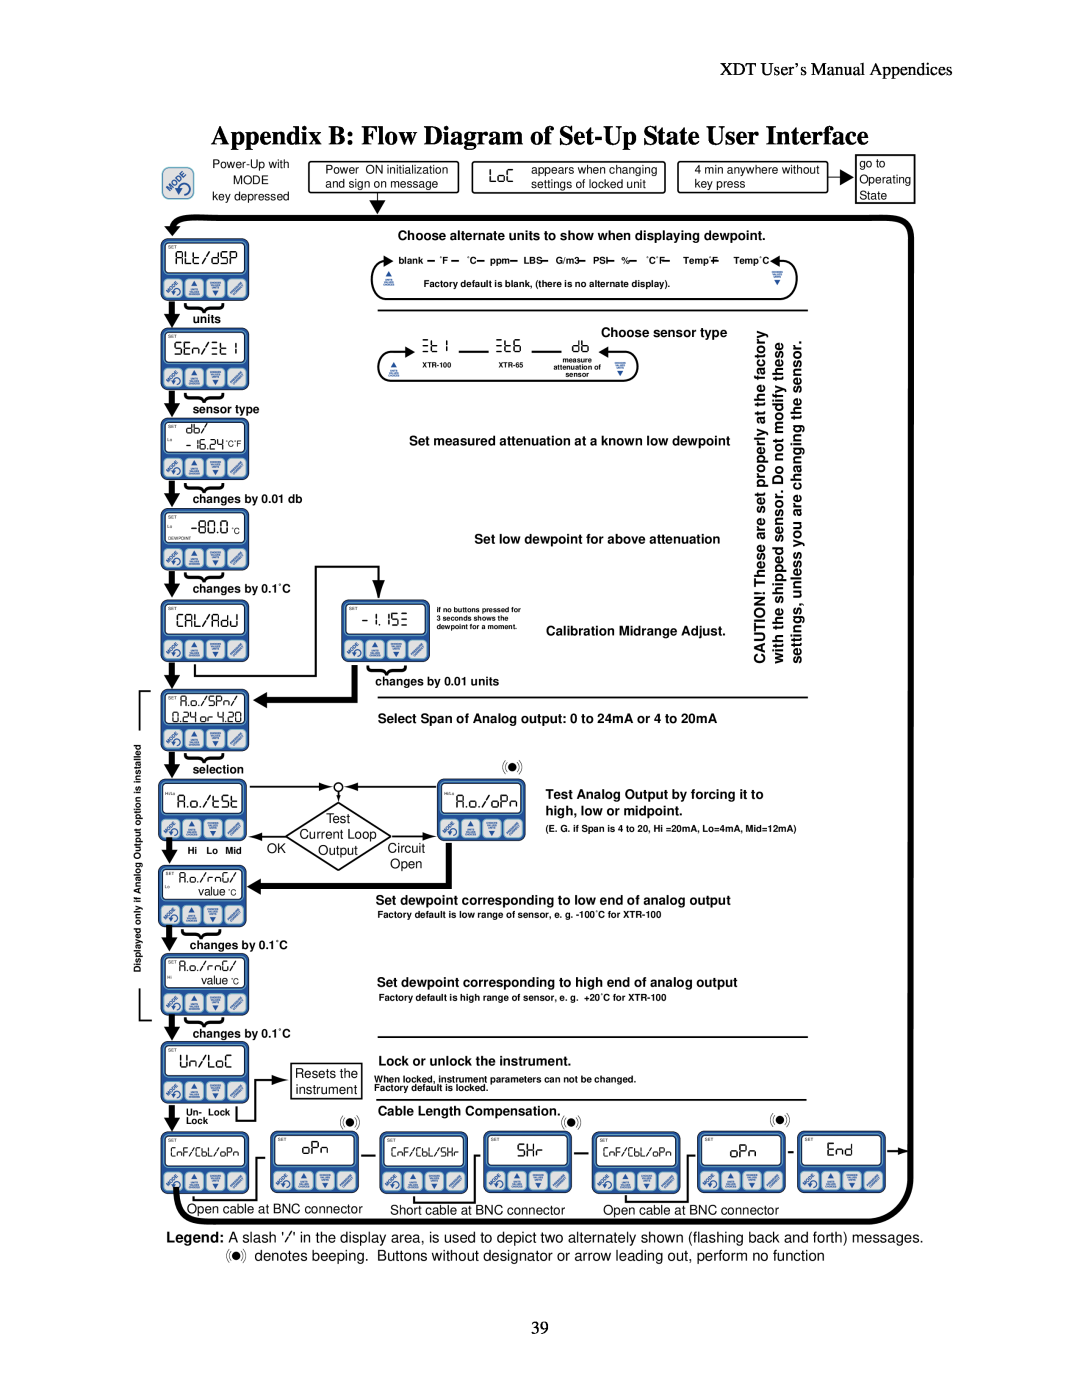 Epson XDT manual Appendix B Flow Diagram of Set-Up State User Interface, 16.24˚C˚F, SETSEN/XT1units, 80.0˚C, Hi/Lo A.O./OPN 